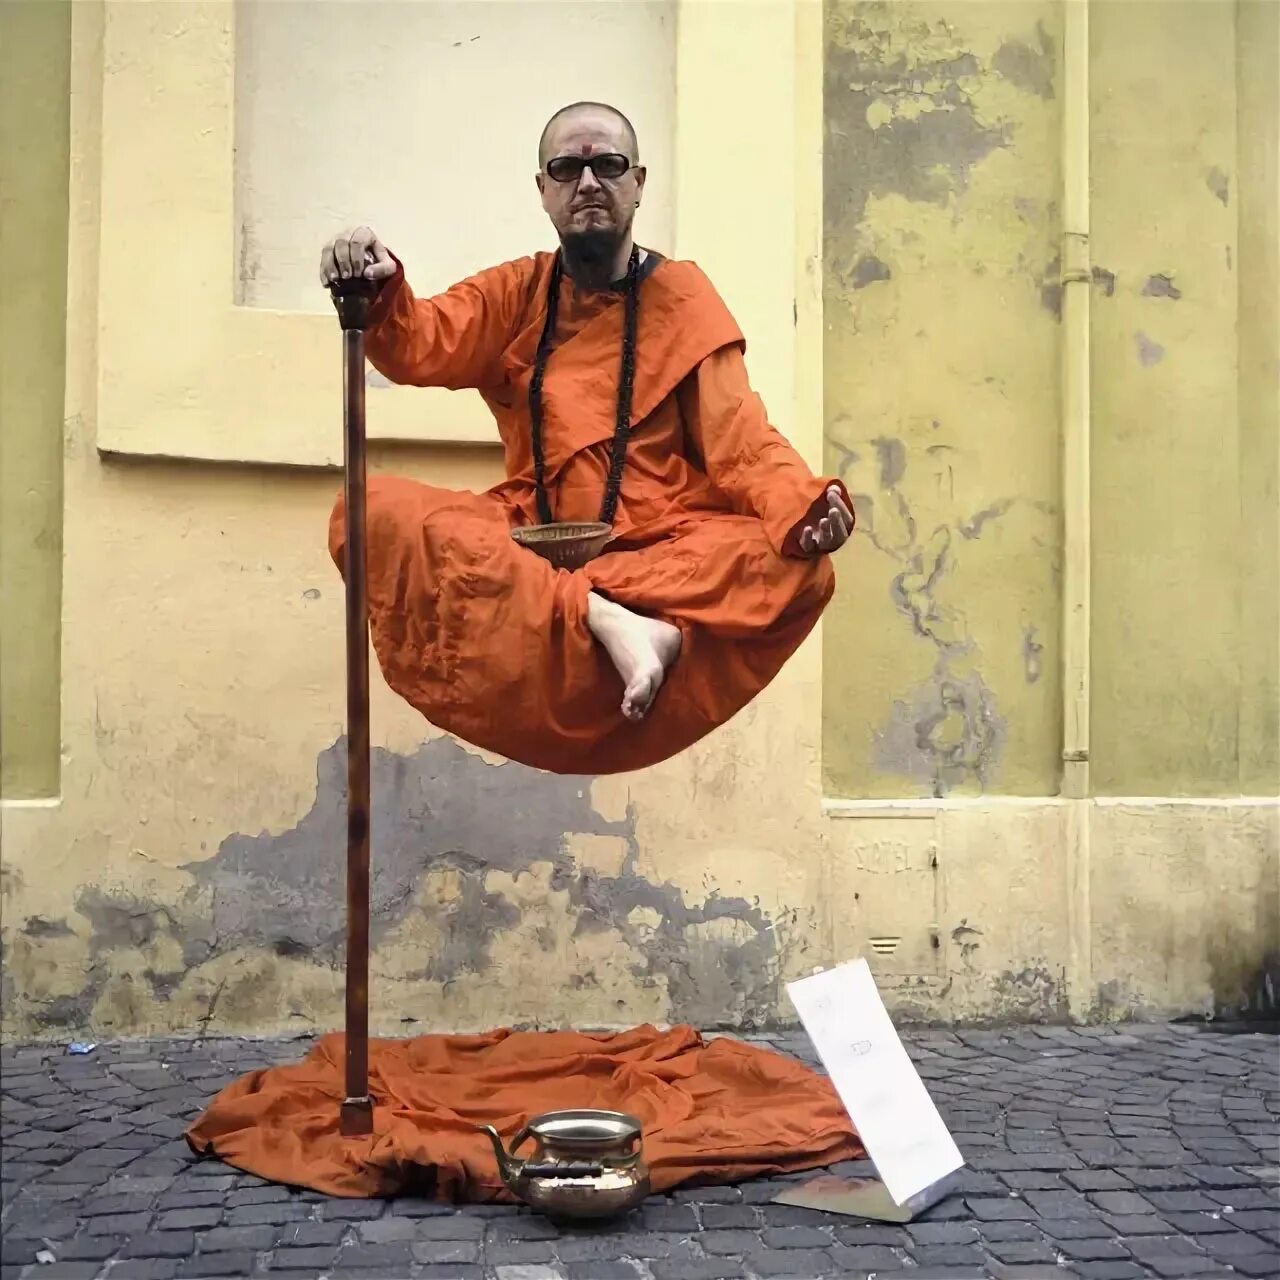 Монах в штанах читать. Левитирующий монах секрет. Левитирующие монахи Тибета. Тибетский монах левитирует. Будда Шаолинь.